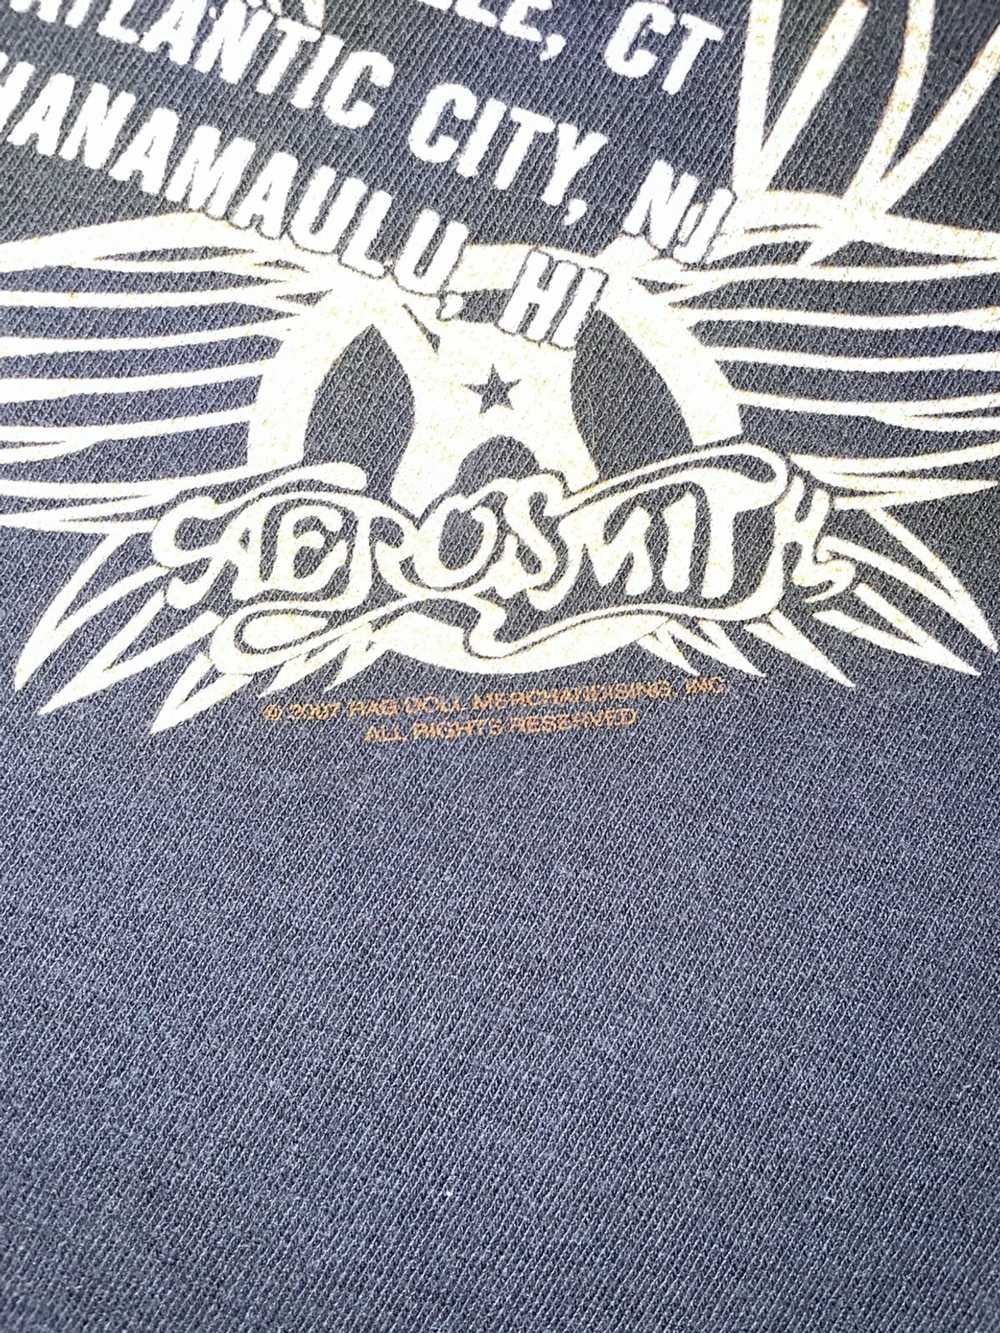 Band Tees × Vintage 2007 Aerosmith Tour tee - image 8